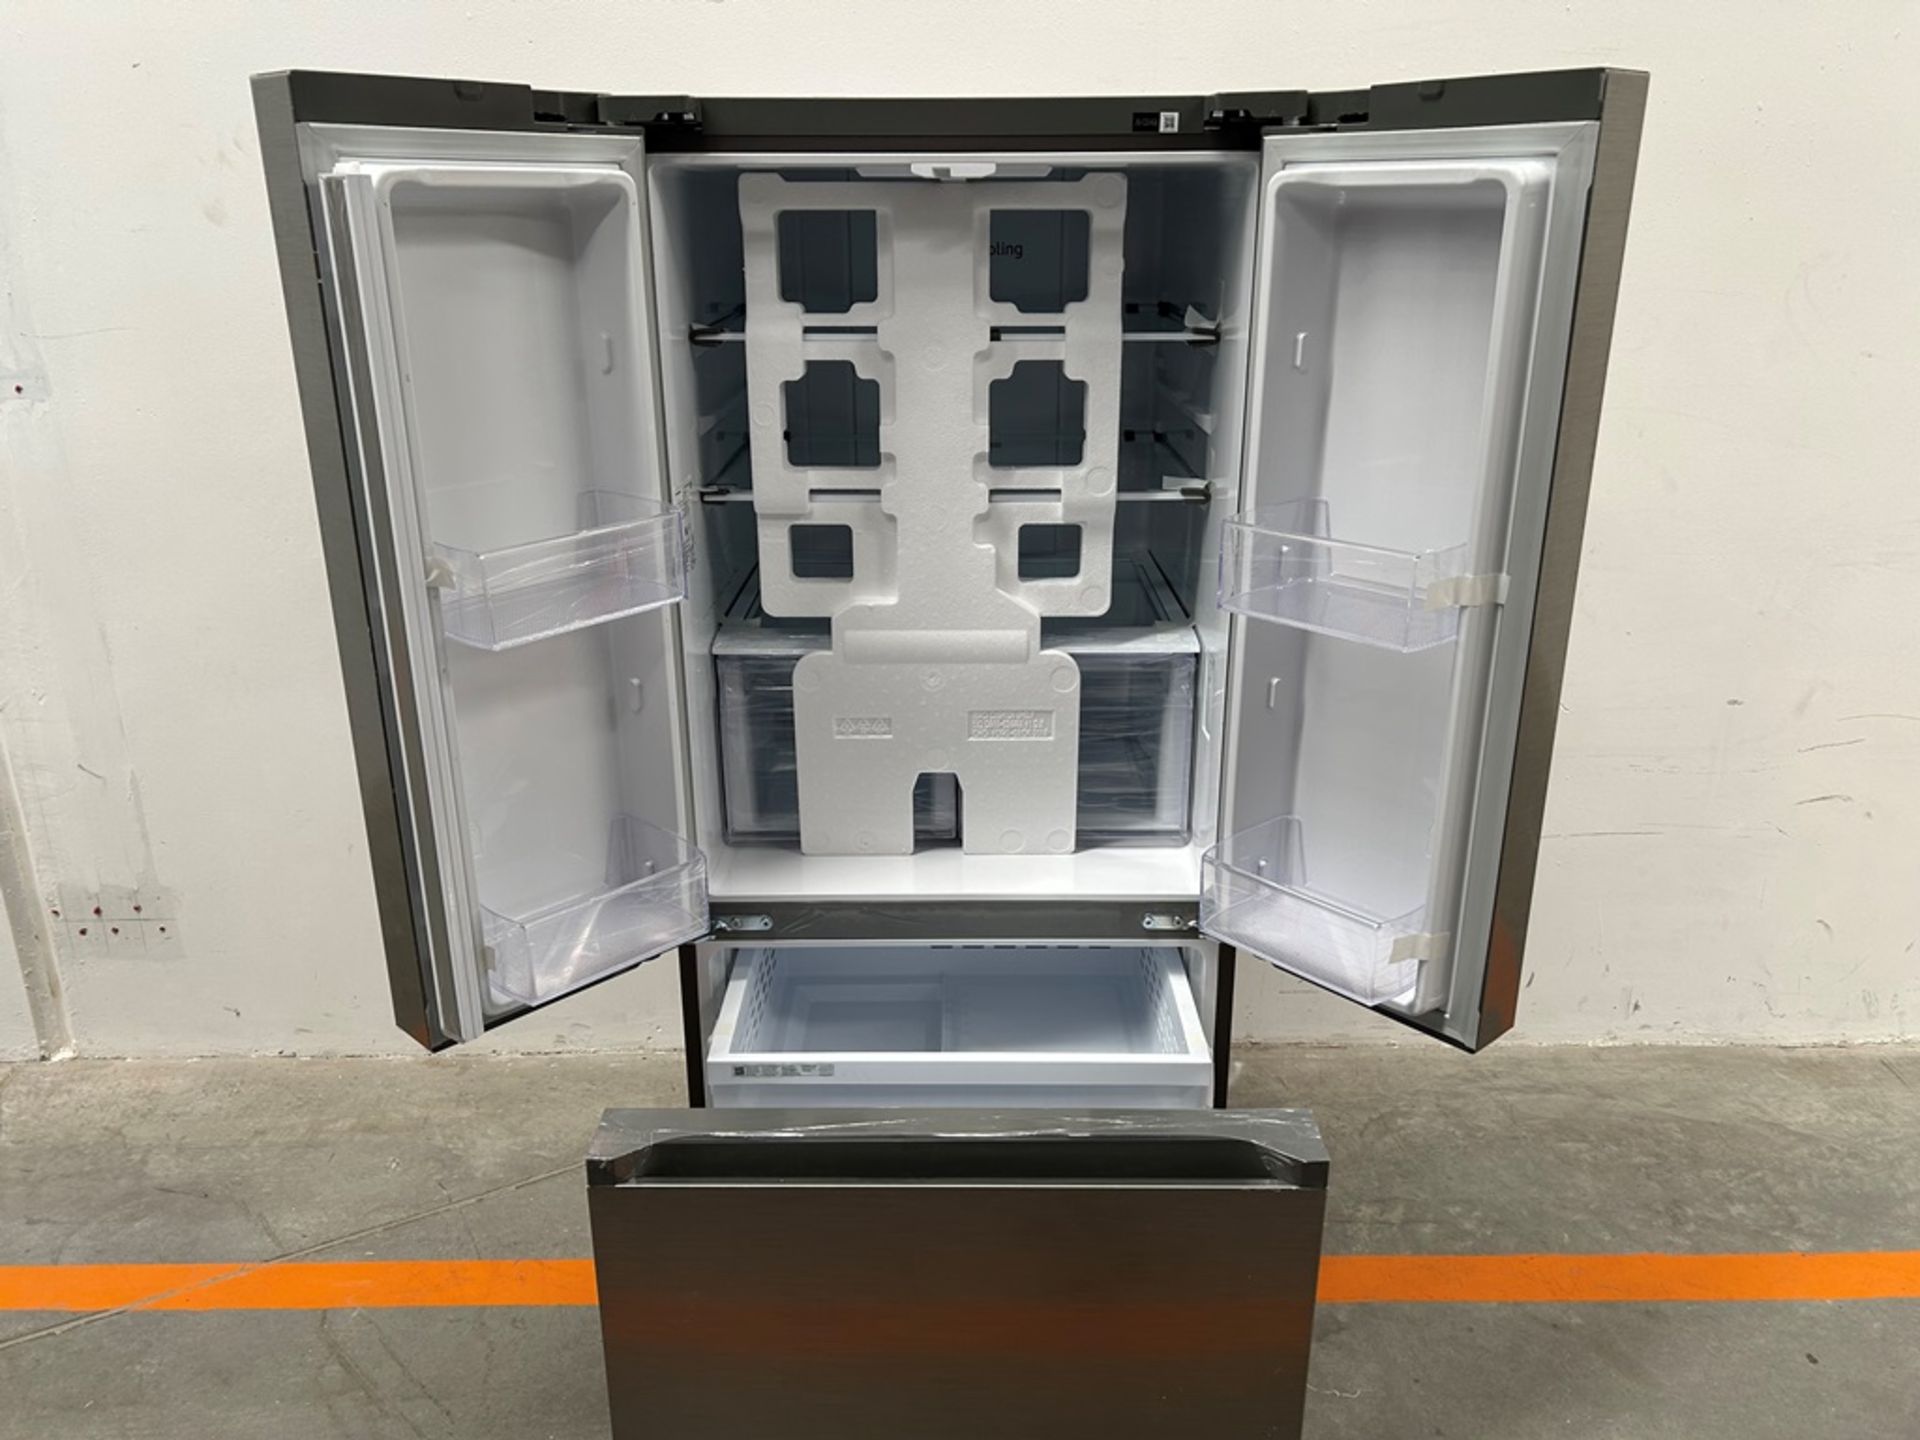 (NUEVO) Refrigerador Marca SAMSUNG, Modelo RF22A4010S9, Serie 01874K, Color GRIS - Image 4 of 11